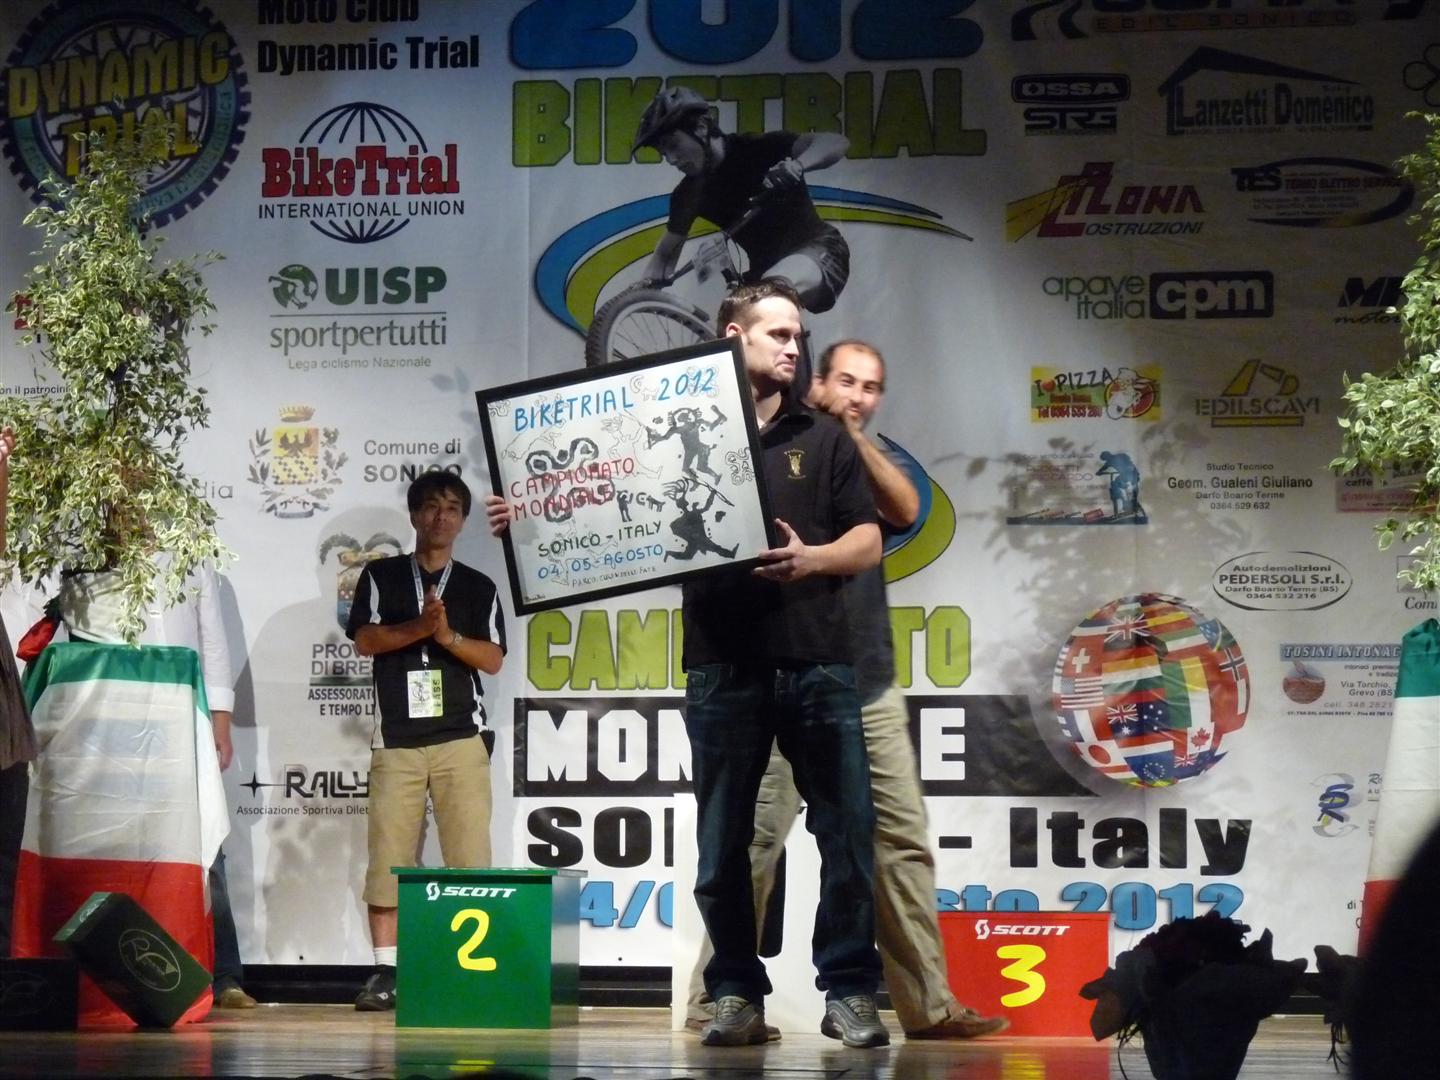 P1120540 (Large) - 2012 - WBC SONICO by Claudio Tombini